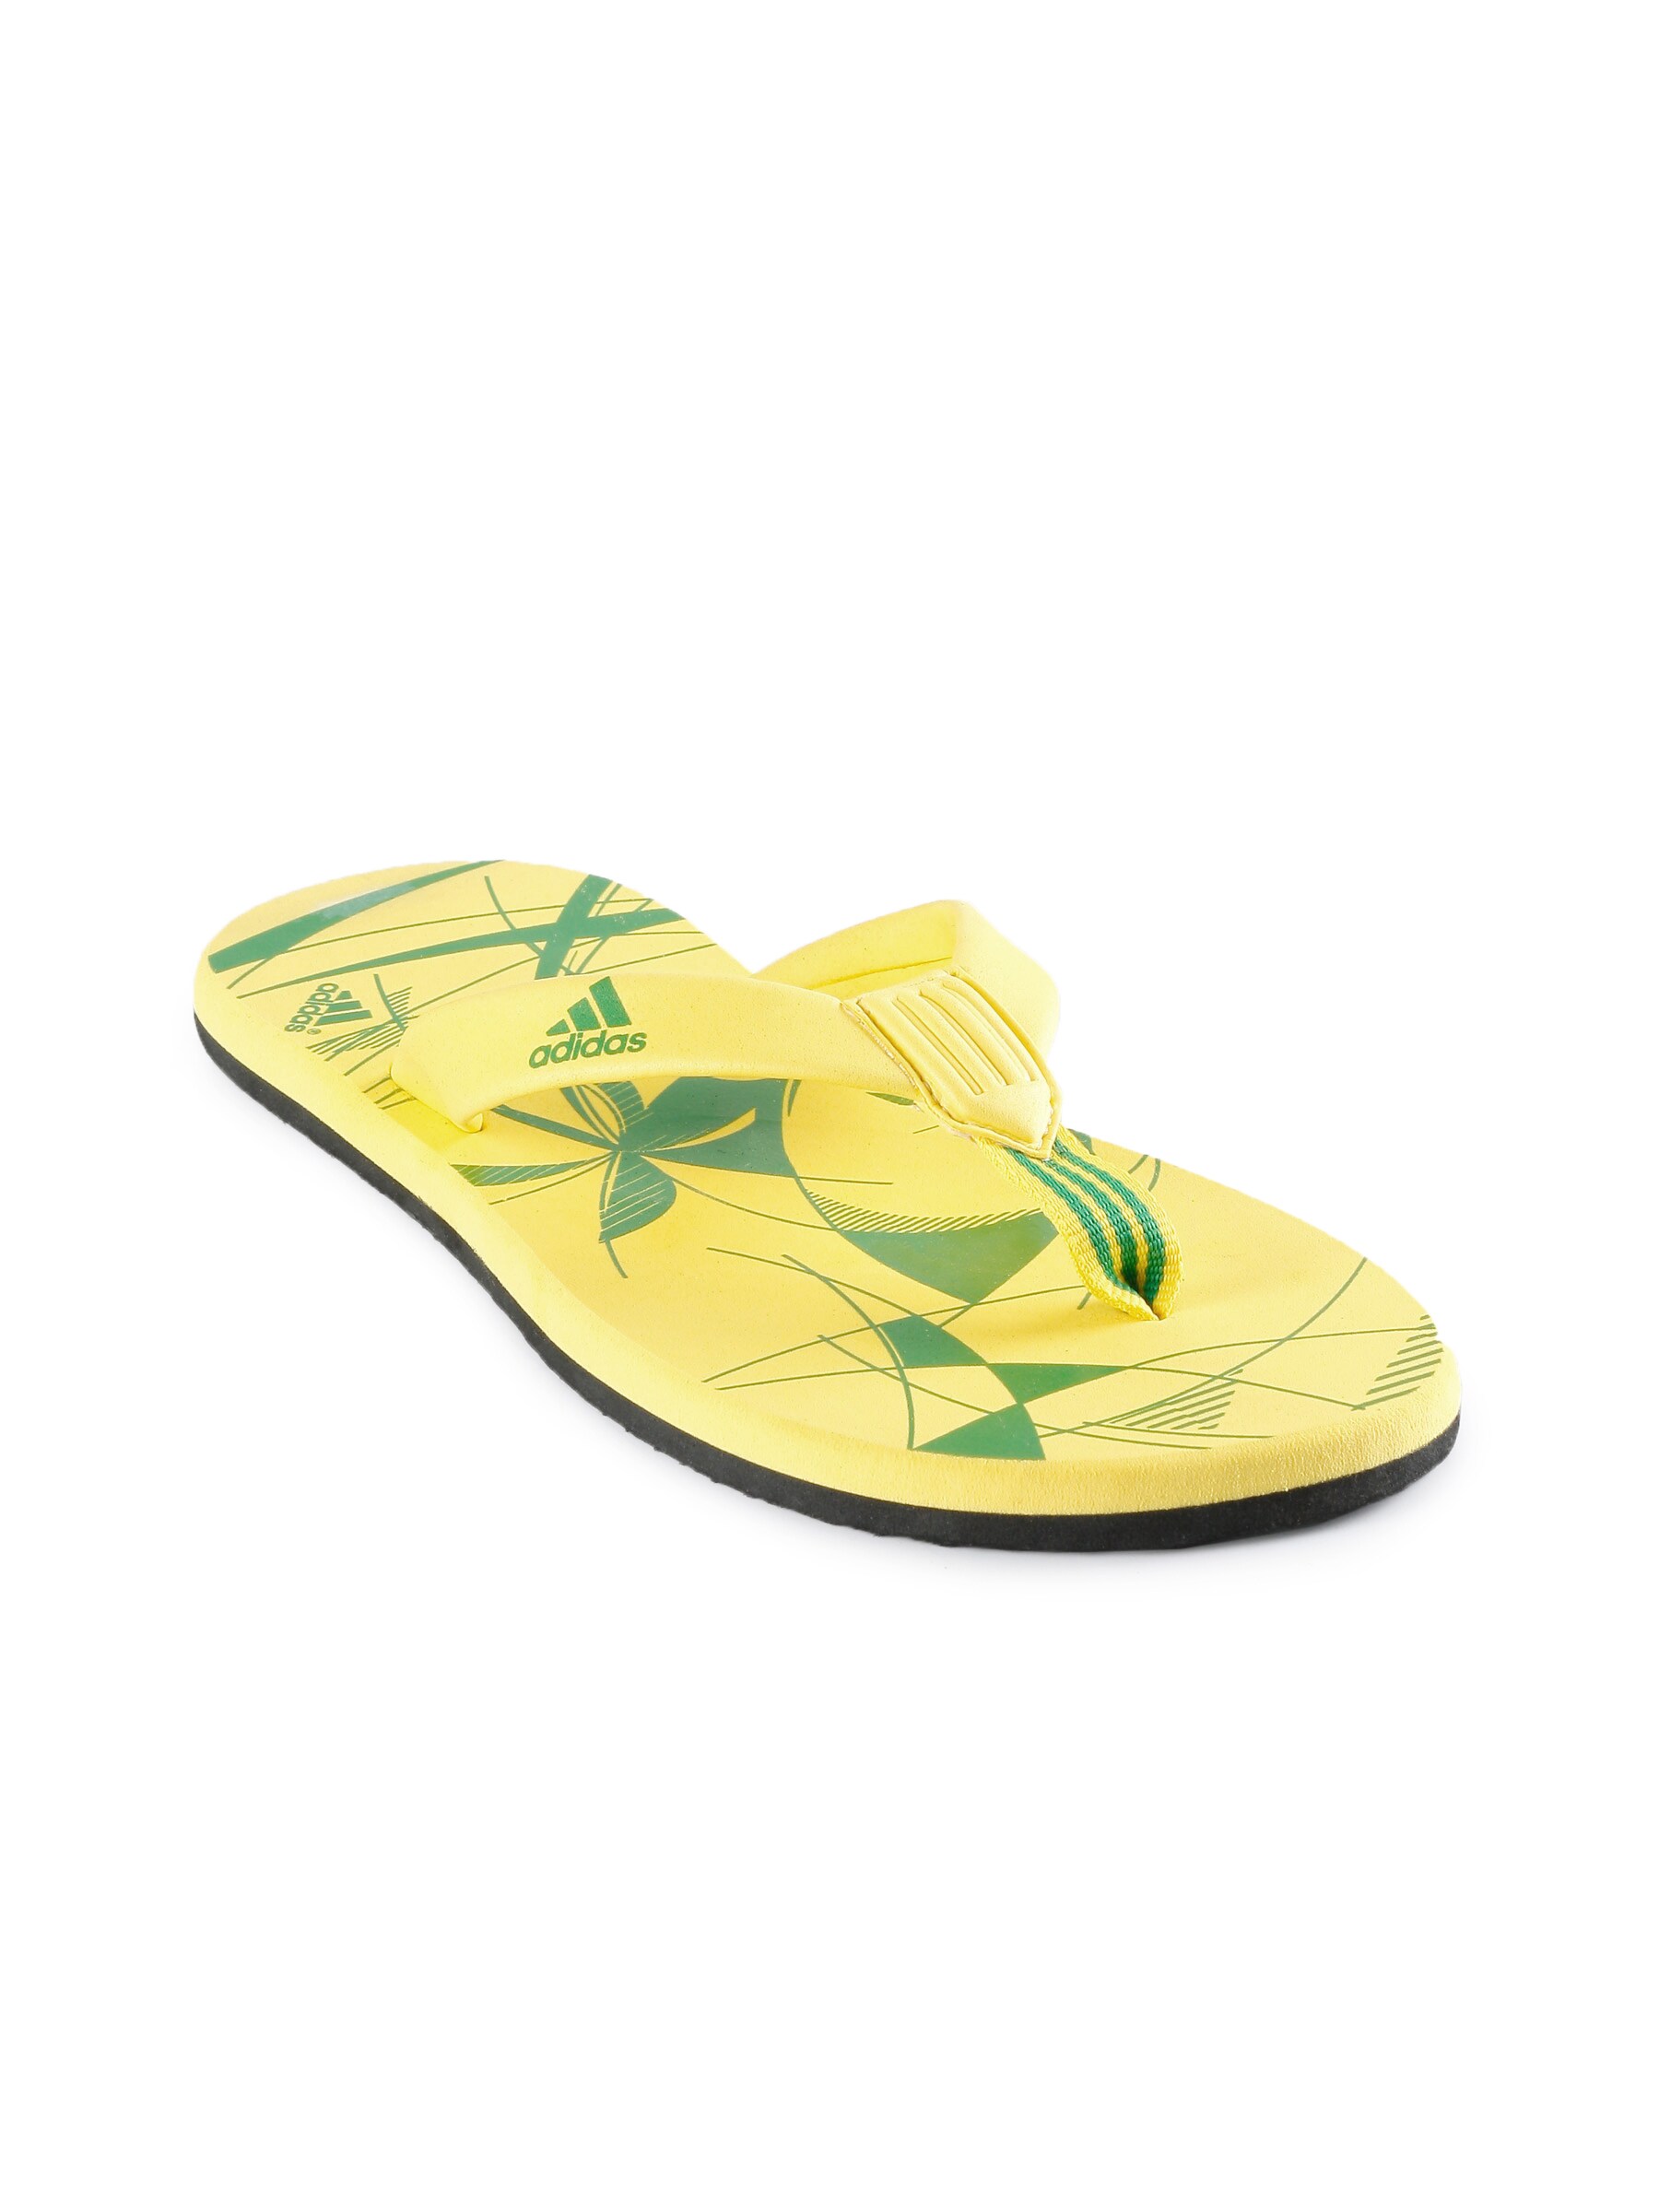 ADIDAS Men Adi Wind Yellow Flip Flops